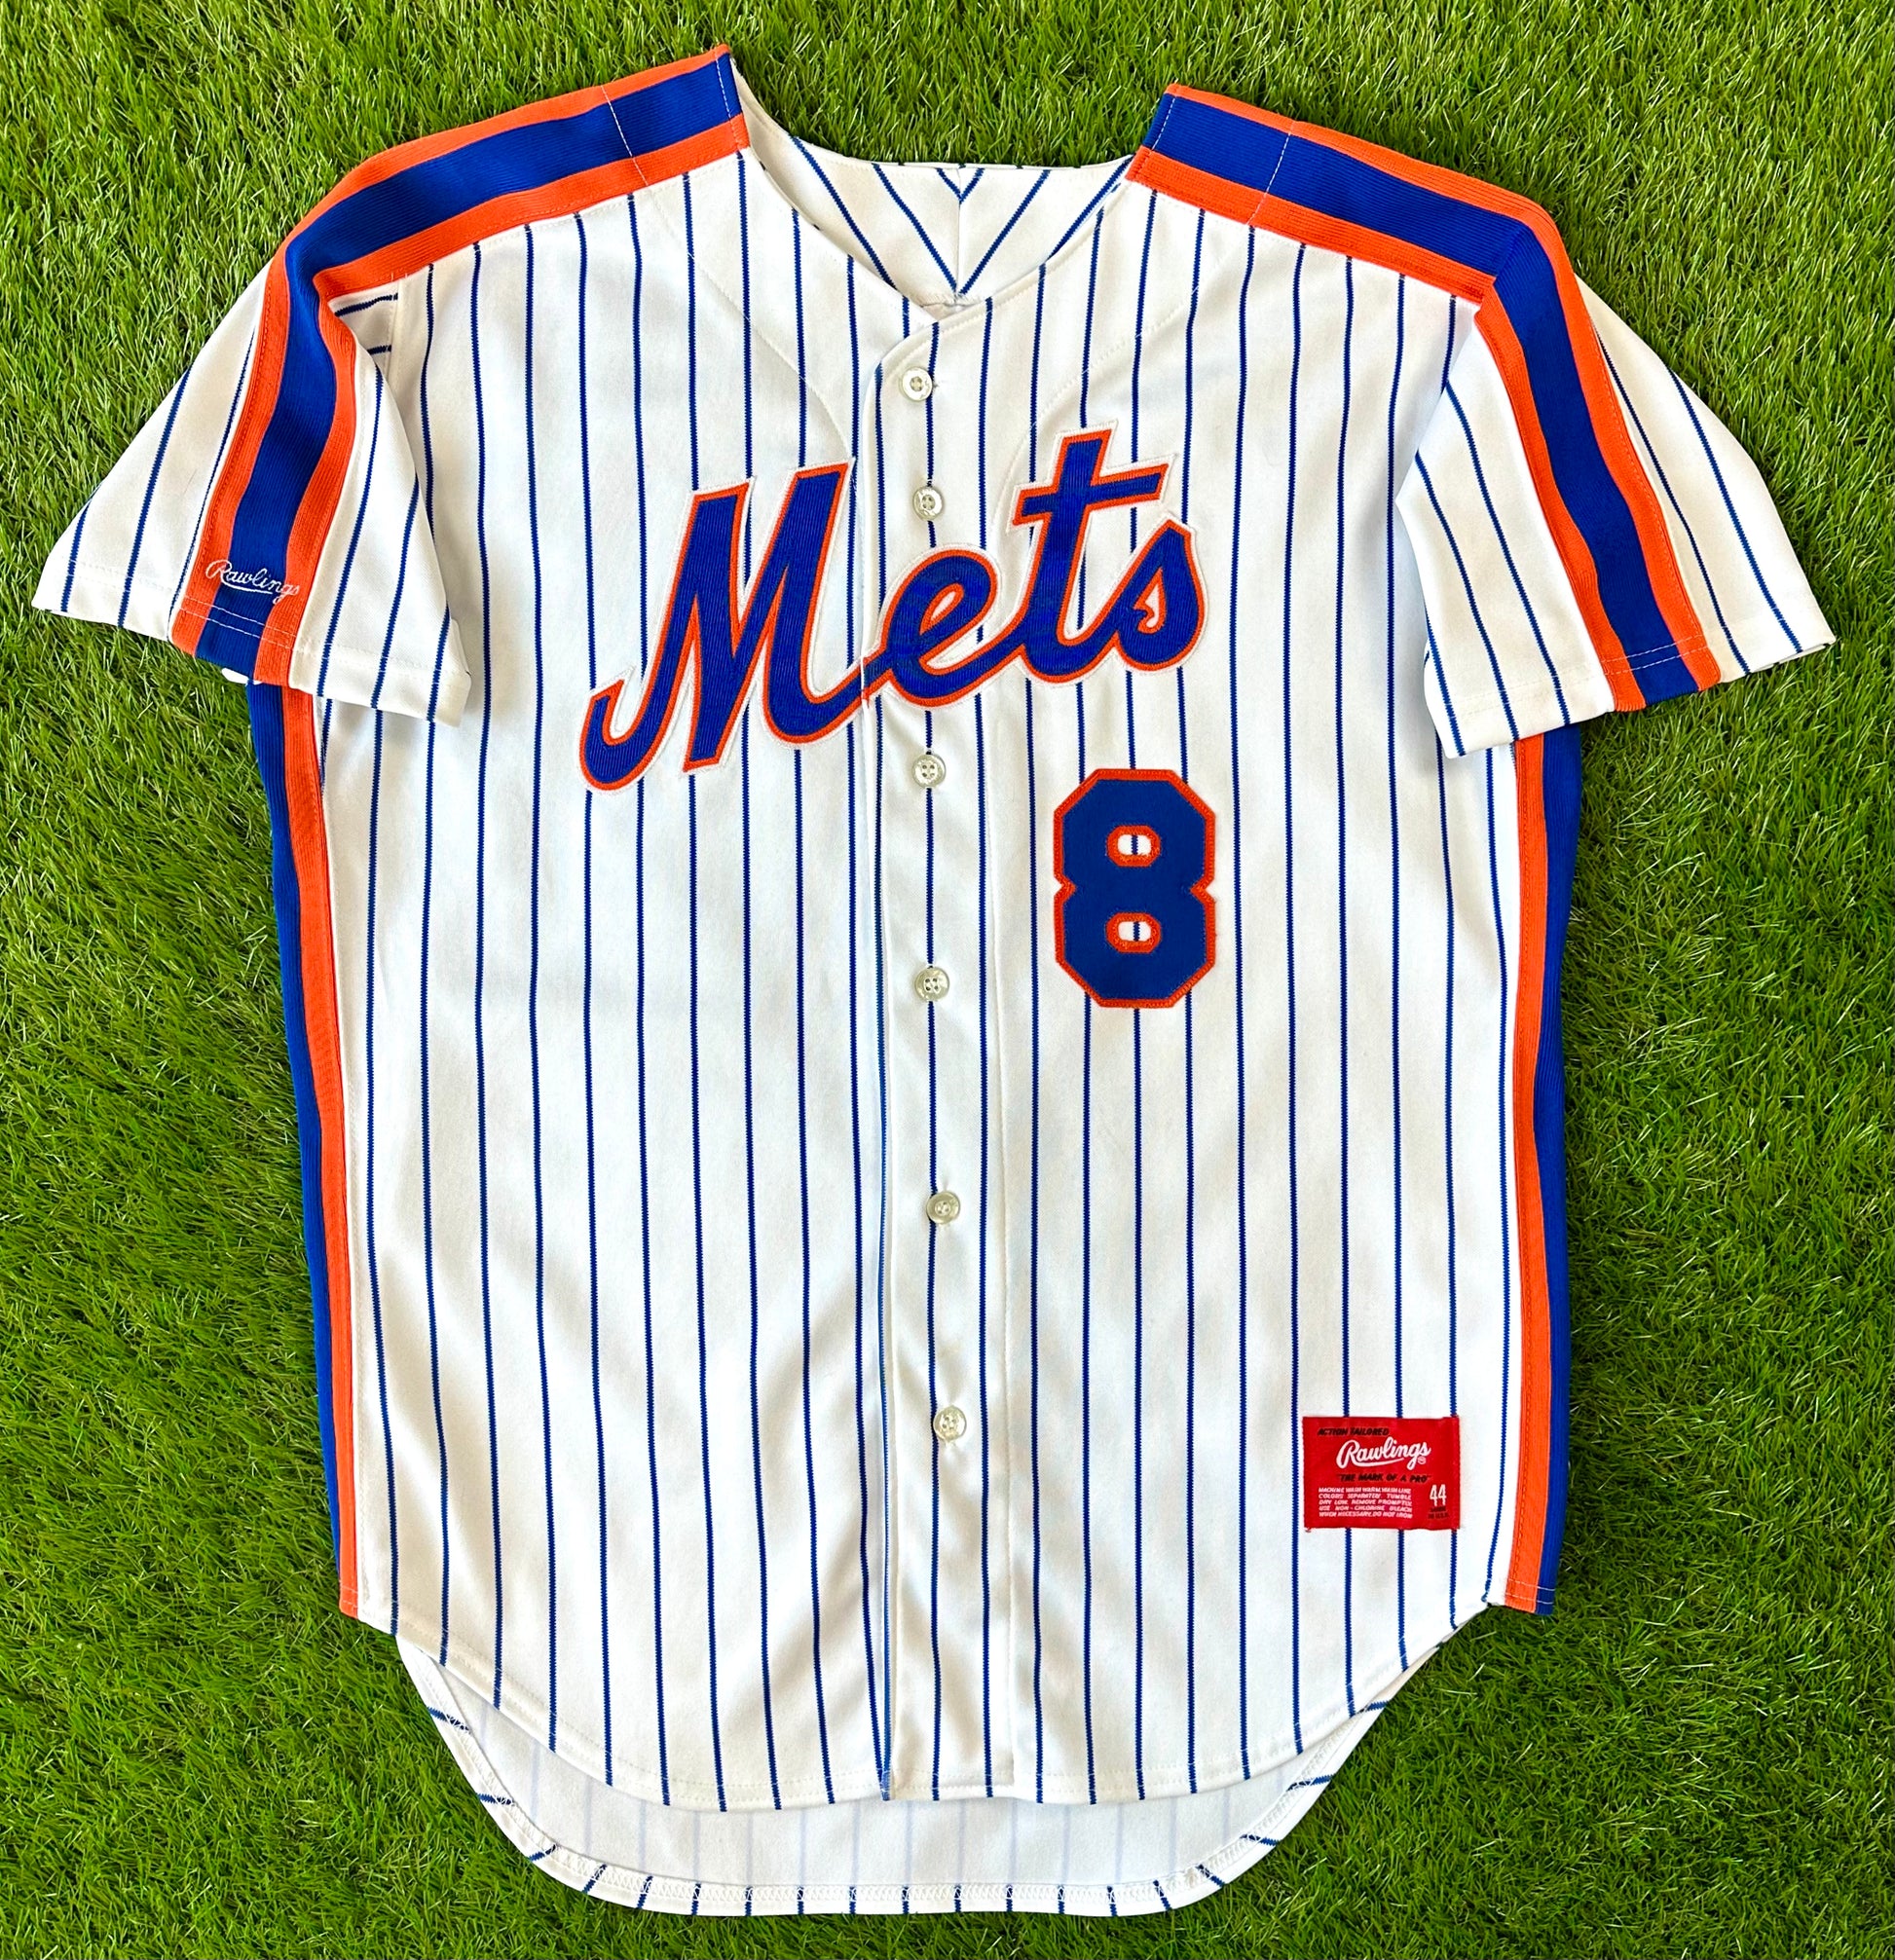 New York Yankees 1982-1991 Road Don Mattingly MLB Baseball Jersey